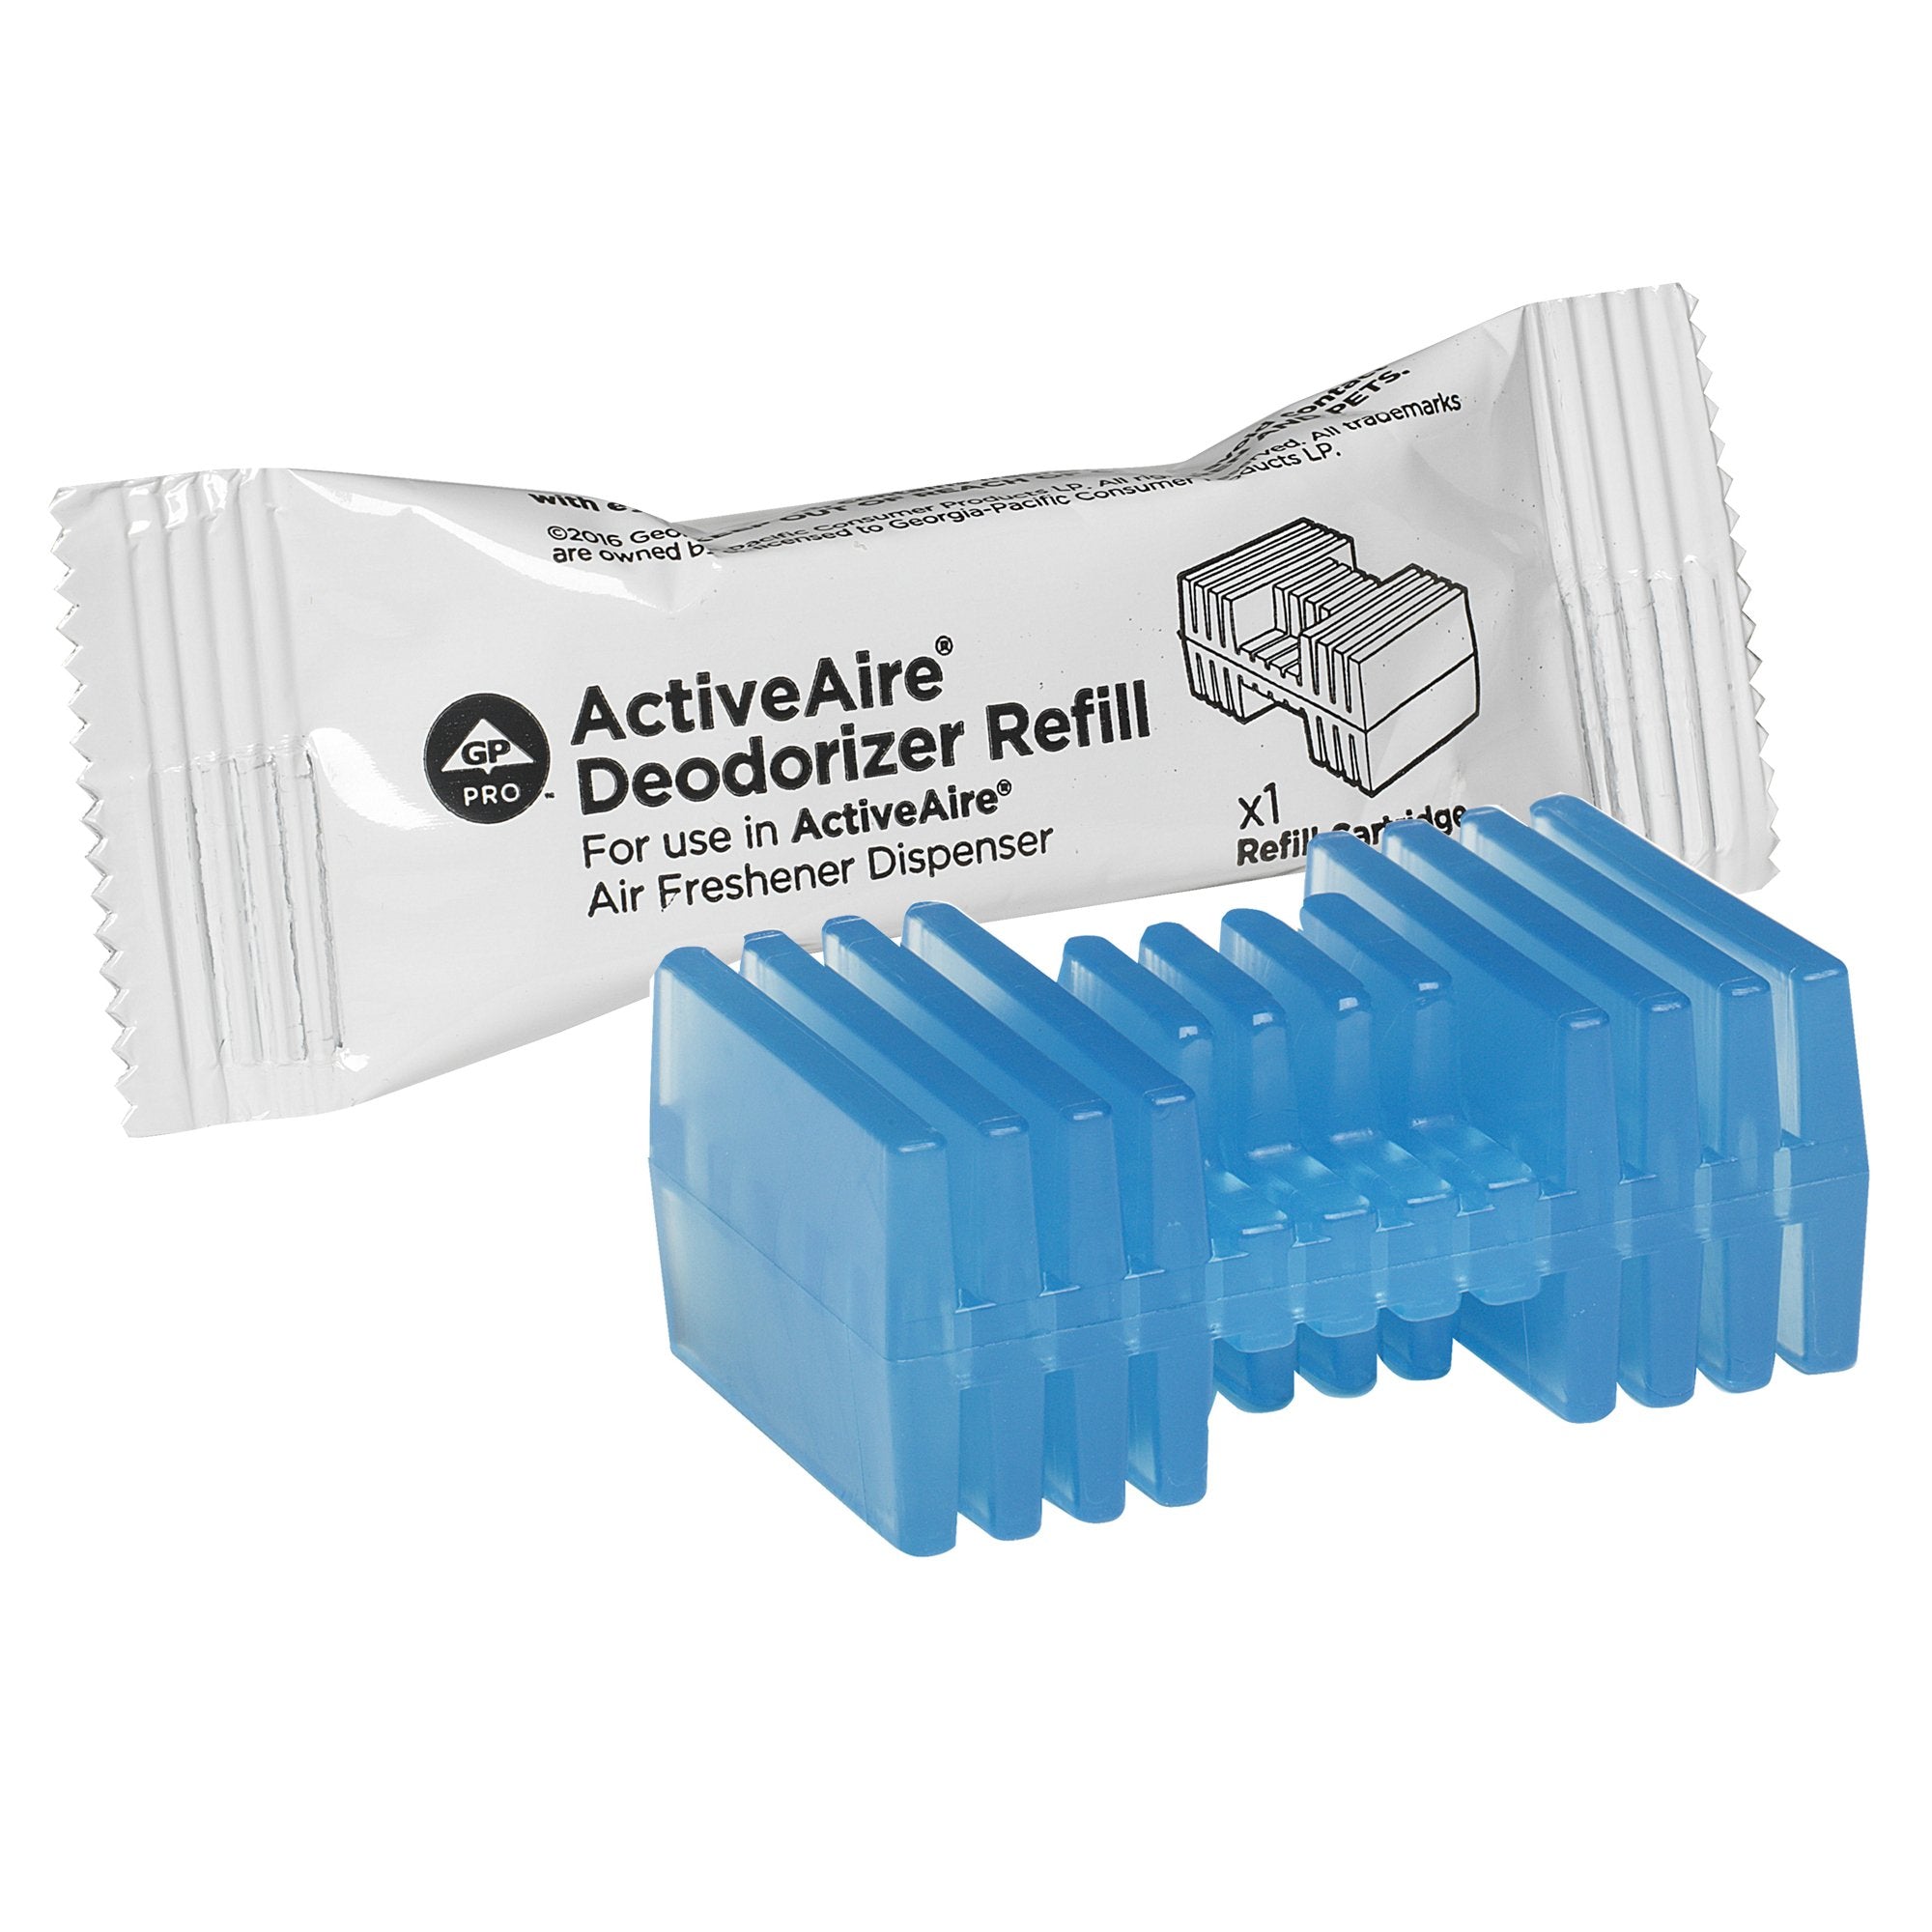 ActiveAire Deodorizer Refill -Case of 12